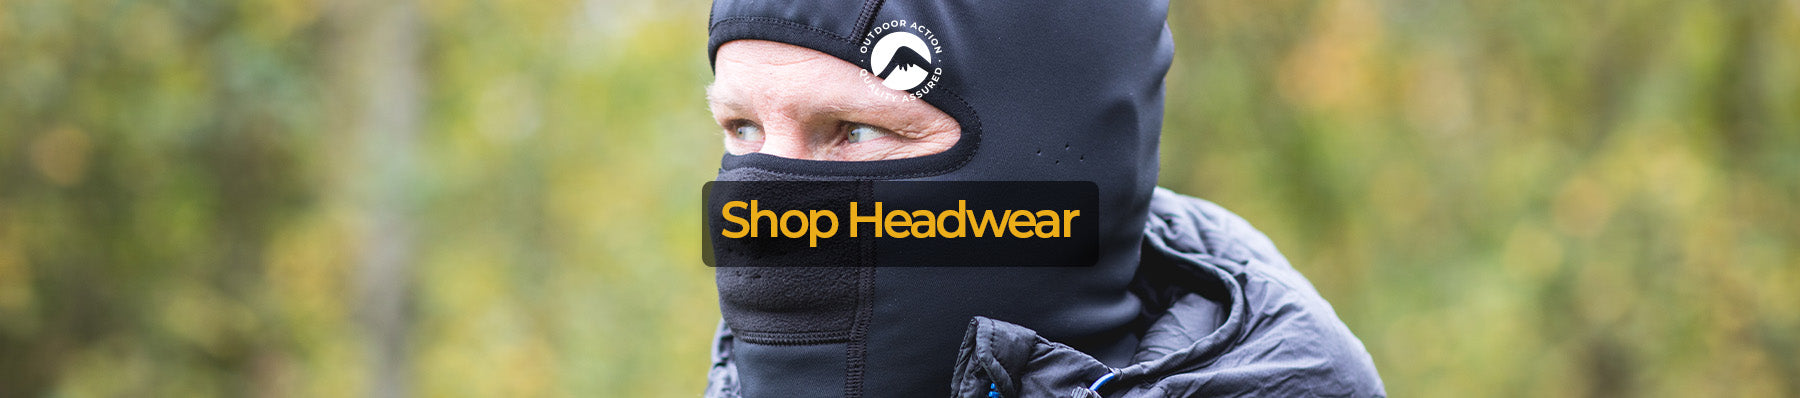 Shop Headwear online at Outdoor Action